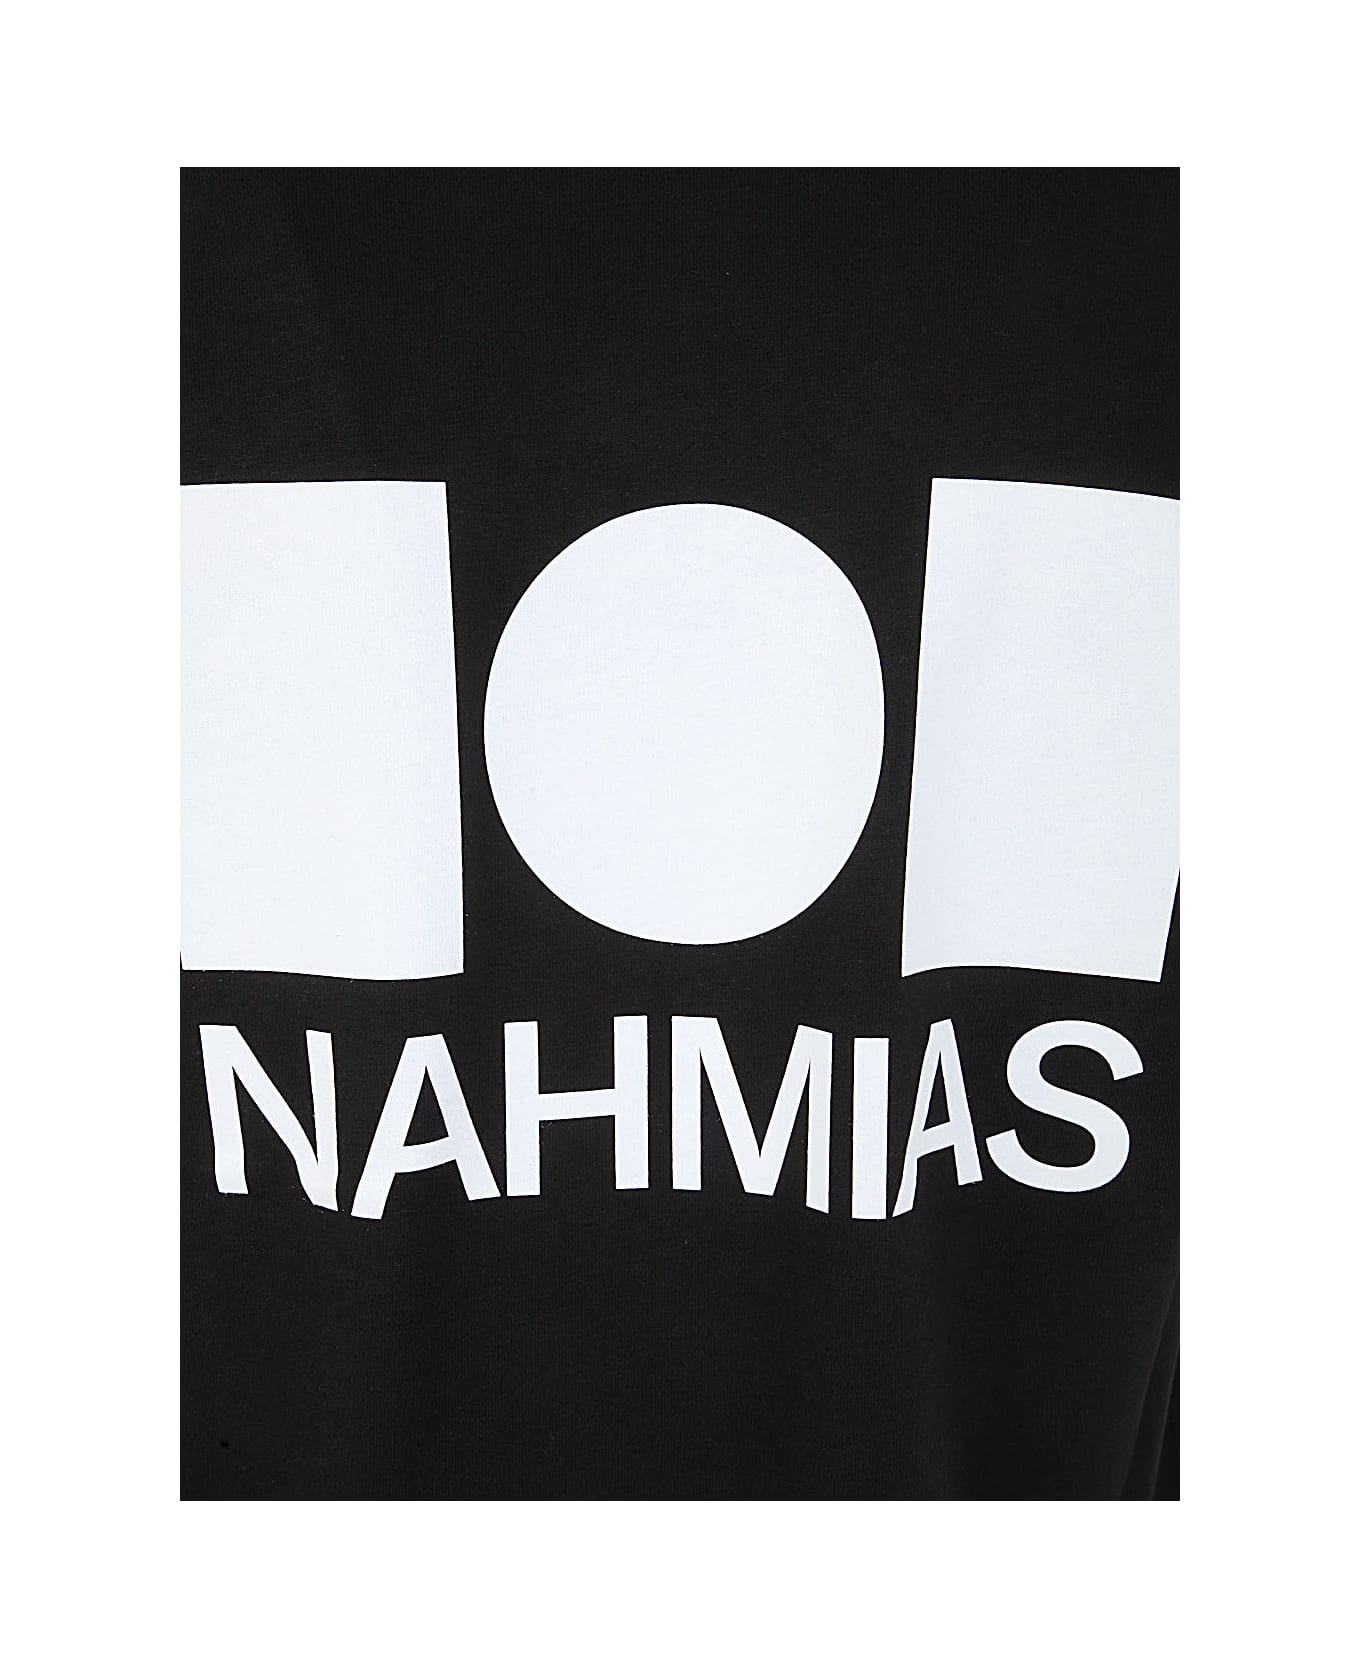 Nahmias Logo T-shirt - Black